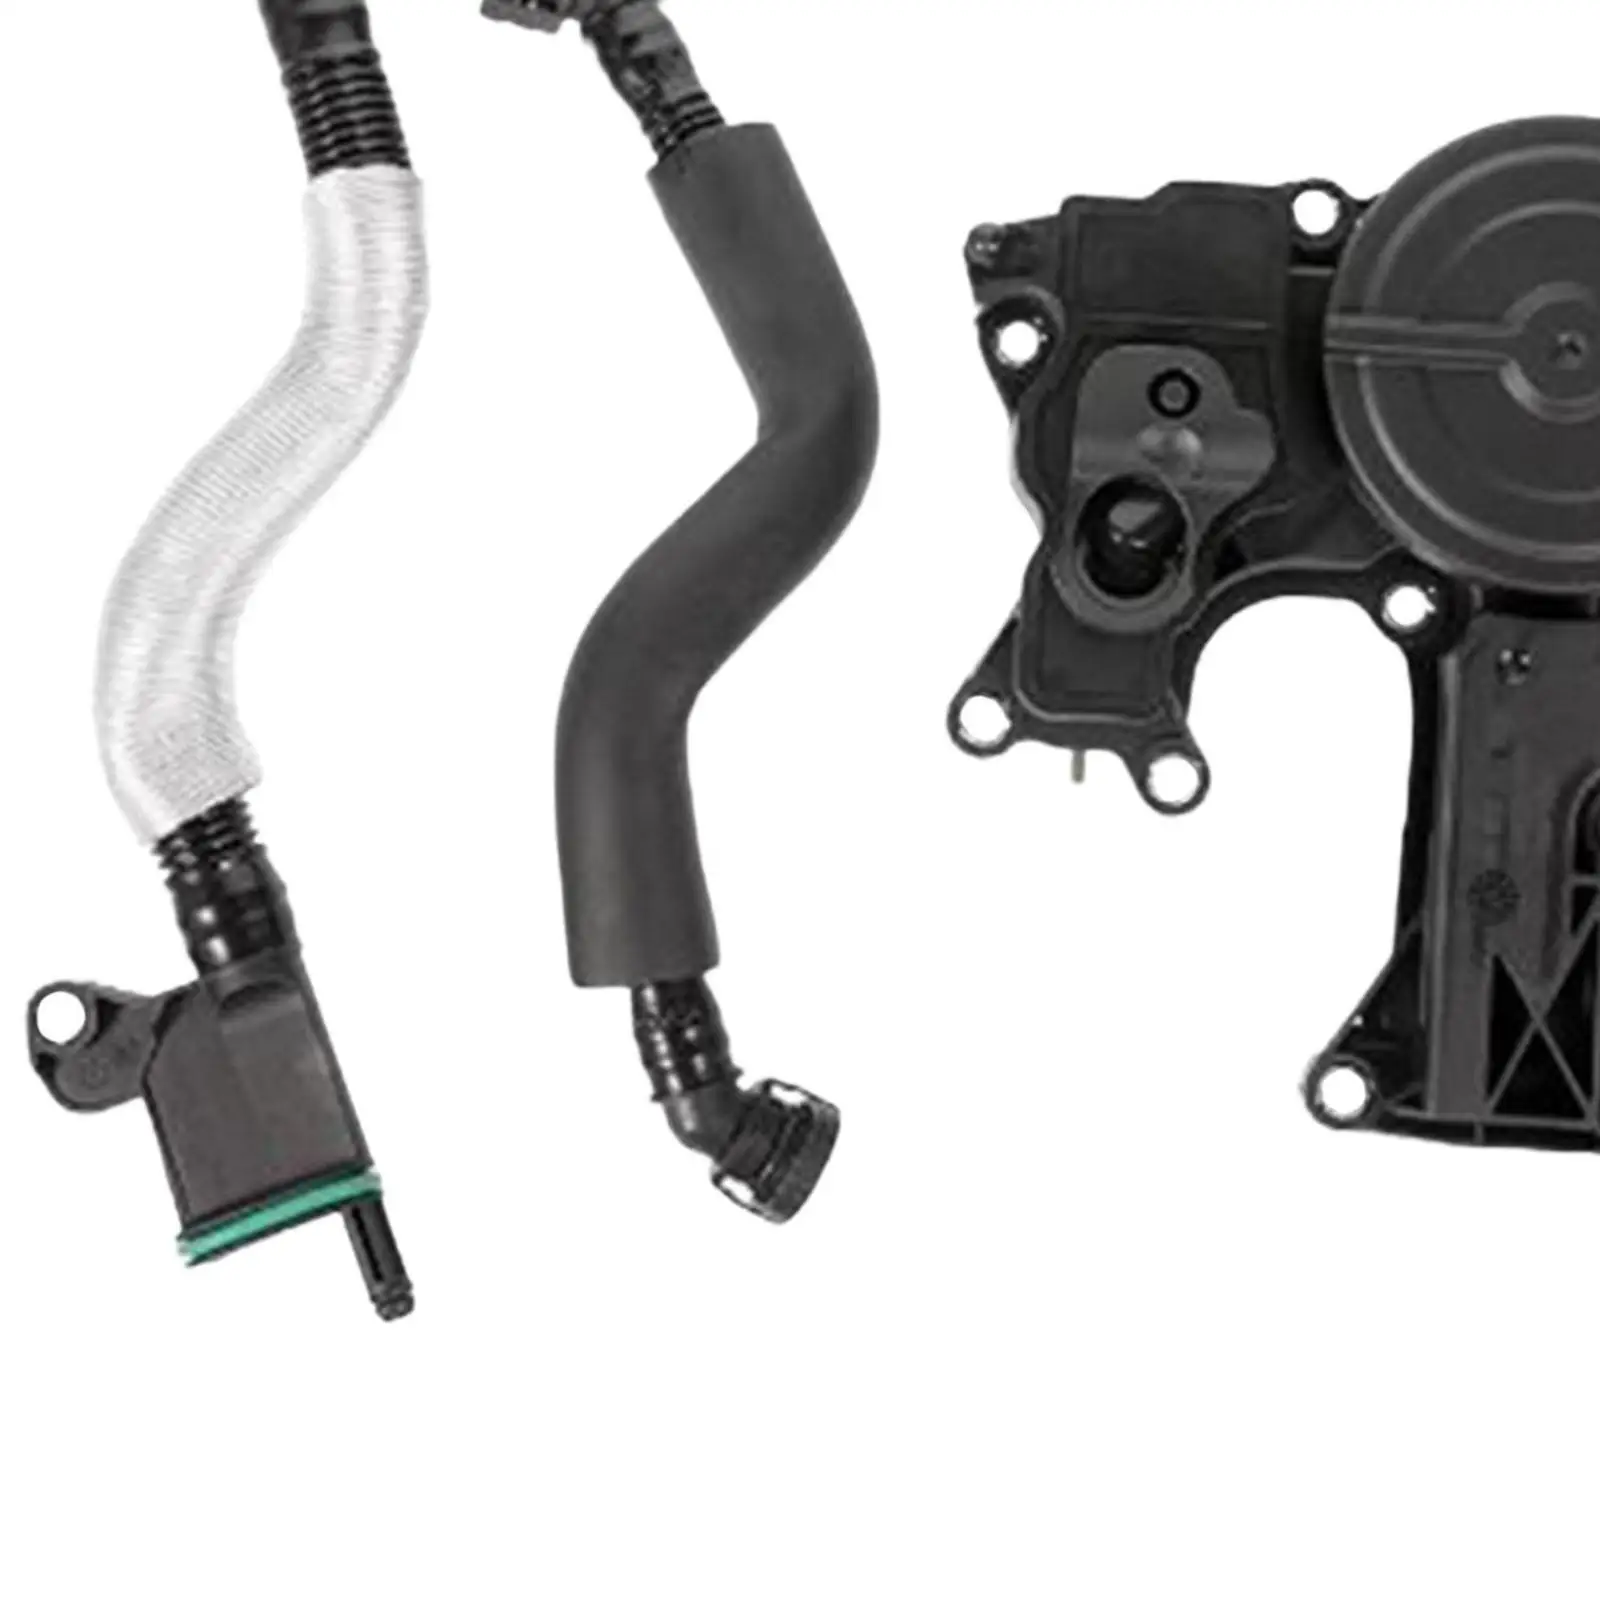 Car Pcv Valve Oil Separator 06H103495 for A4 A5 A6 Q3 Accessories #Auto